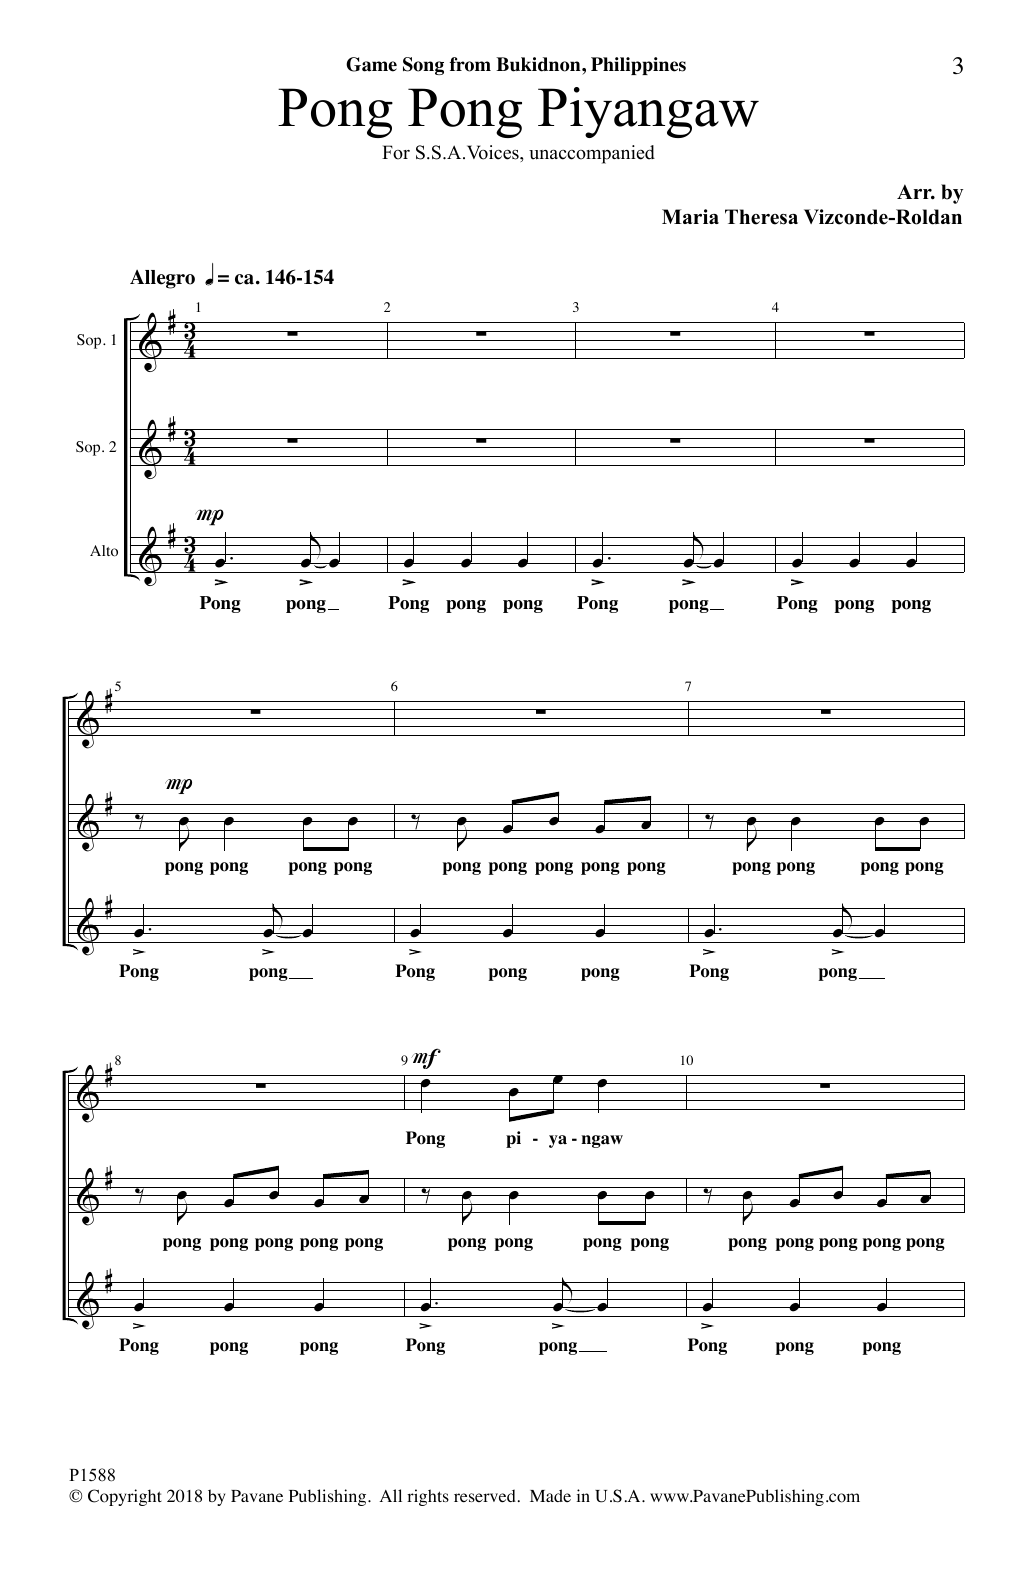 Maria Theresa Vizconde-Roldan Pong Pong Piyangaw Sheet Music Notes & Chords for SSA Choir - Download or Print PDF